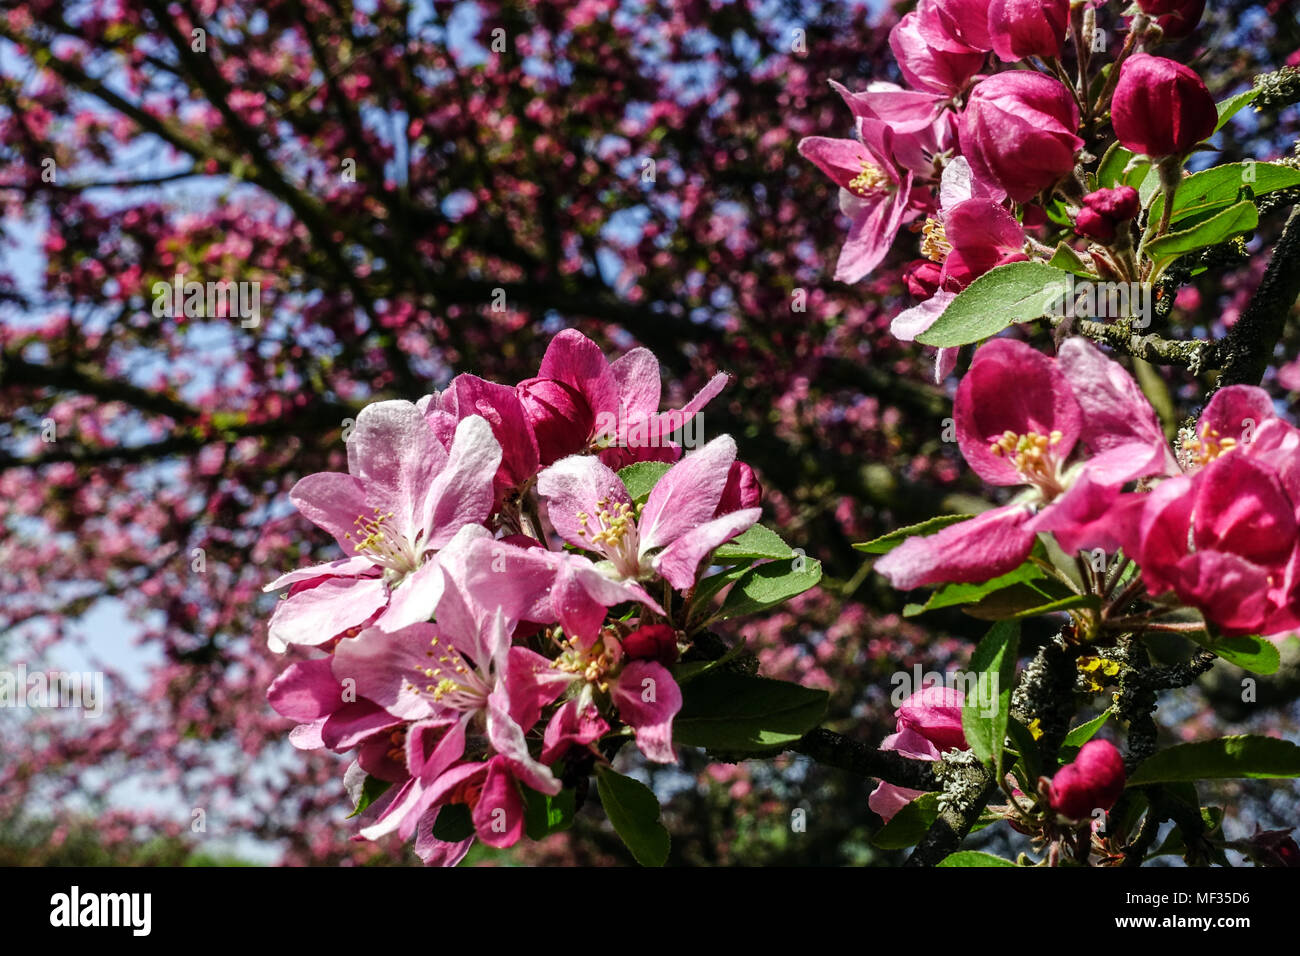 Crabapple, Malus 'Hornet' pink Apple blossoms, ornamental apple tree Stock Photo